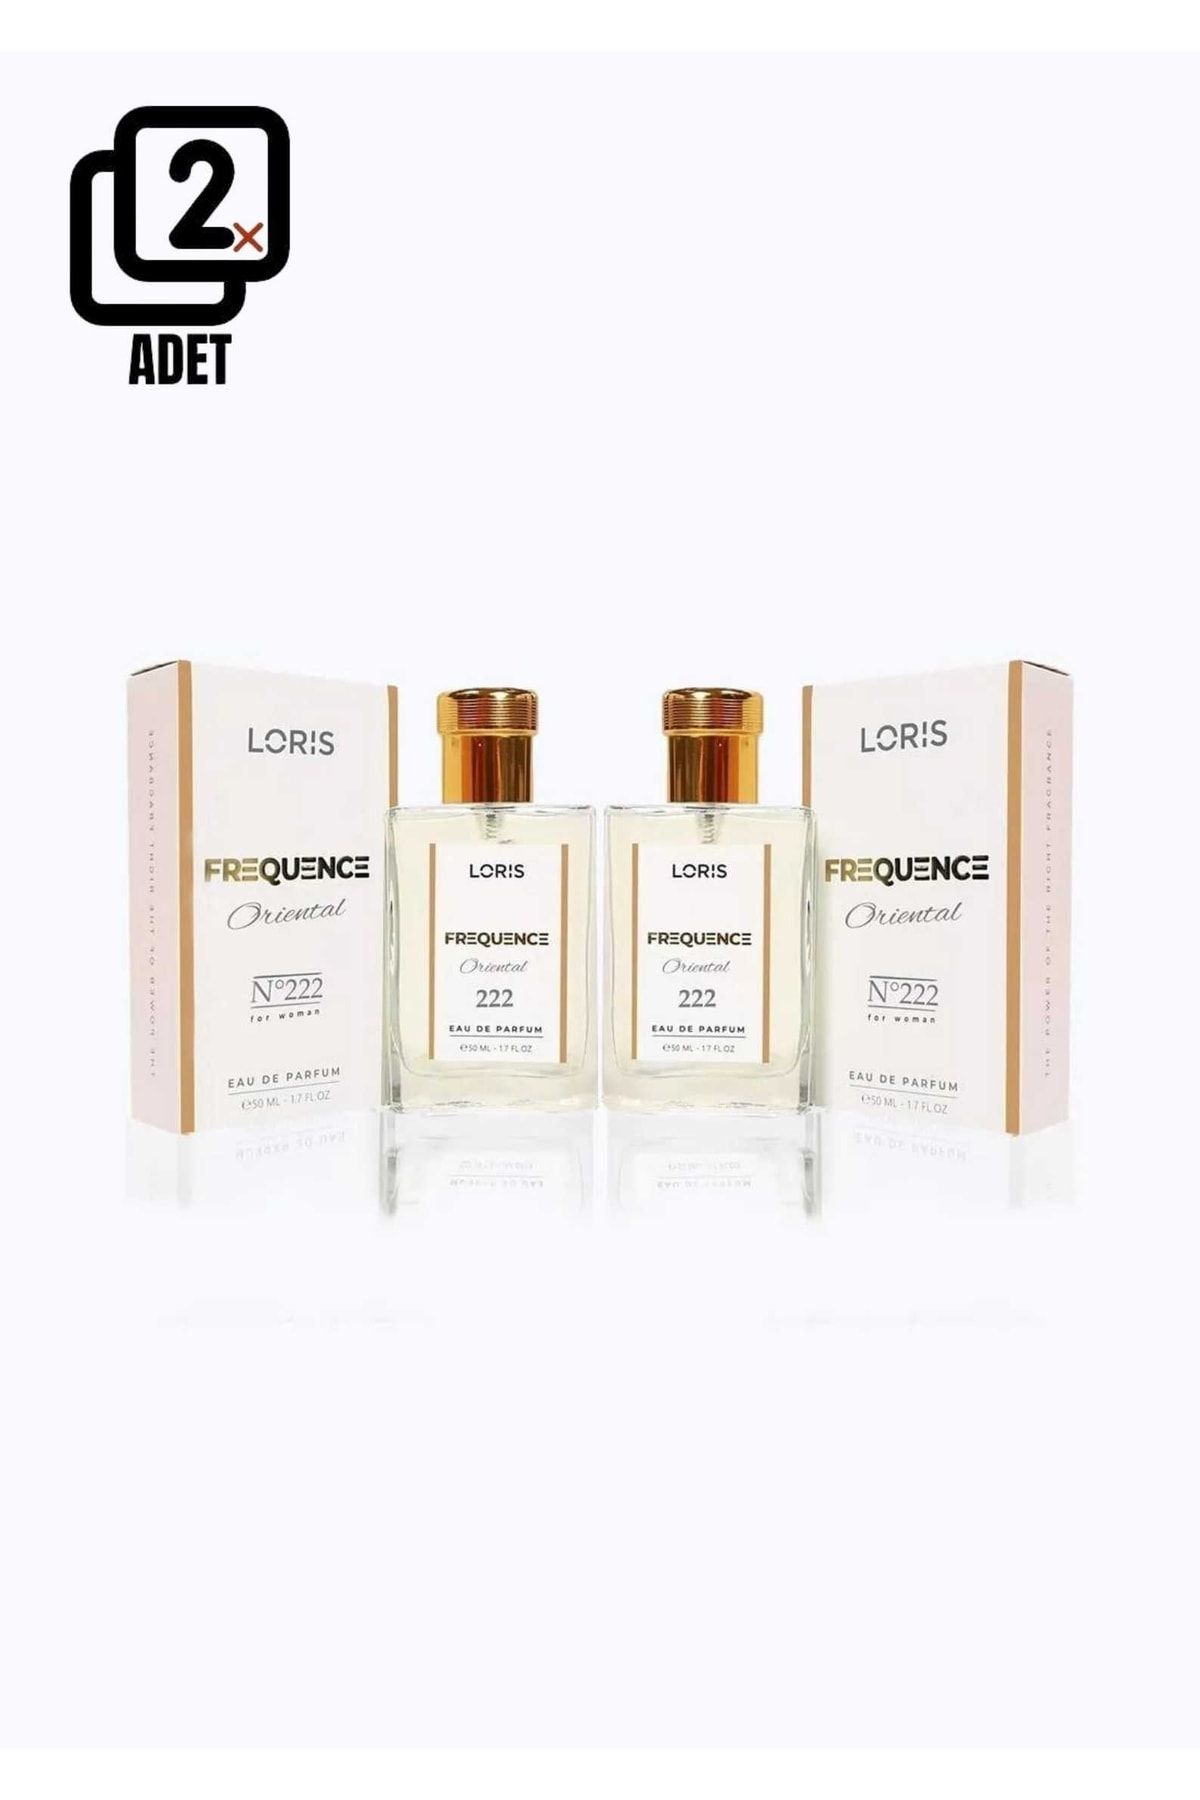 Loris 2 Adet K-222 Frequence Parfume Edp 50 ml Kadın Parfüm